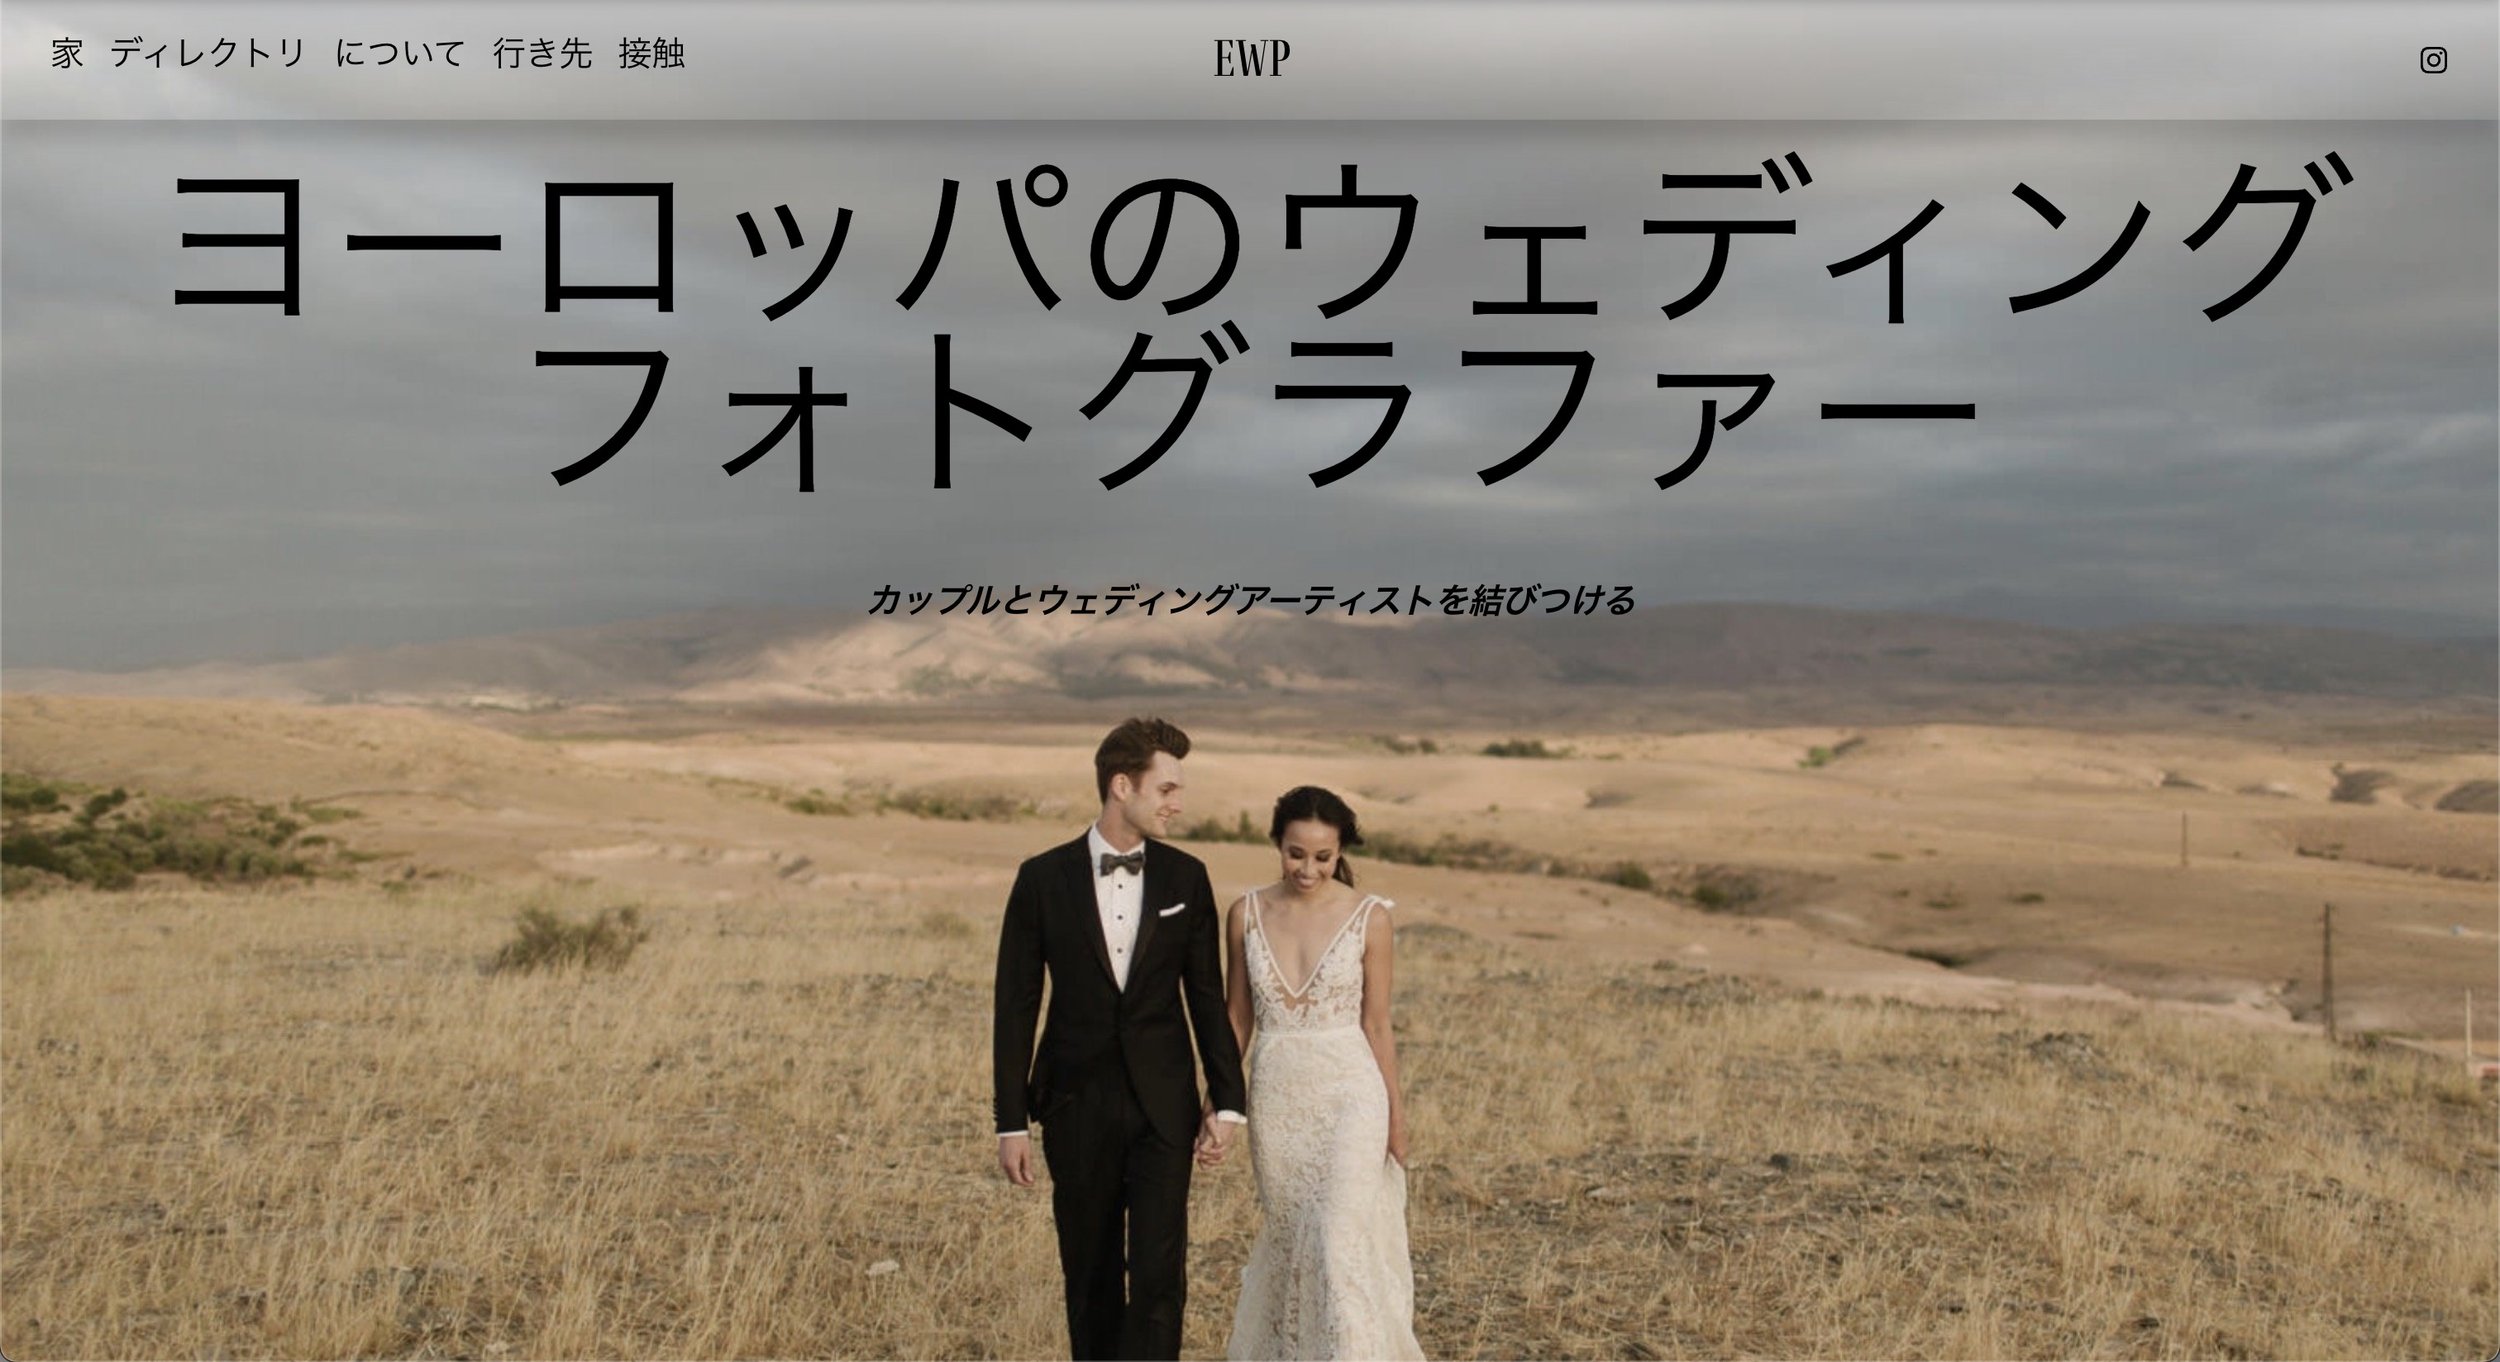 best european wedding photographers website japanese korean arabic.jpg